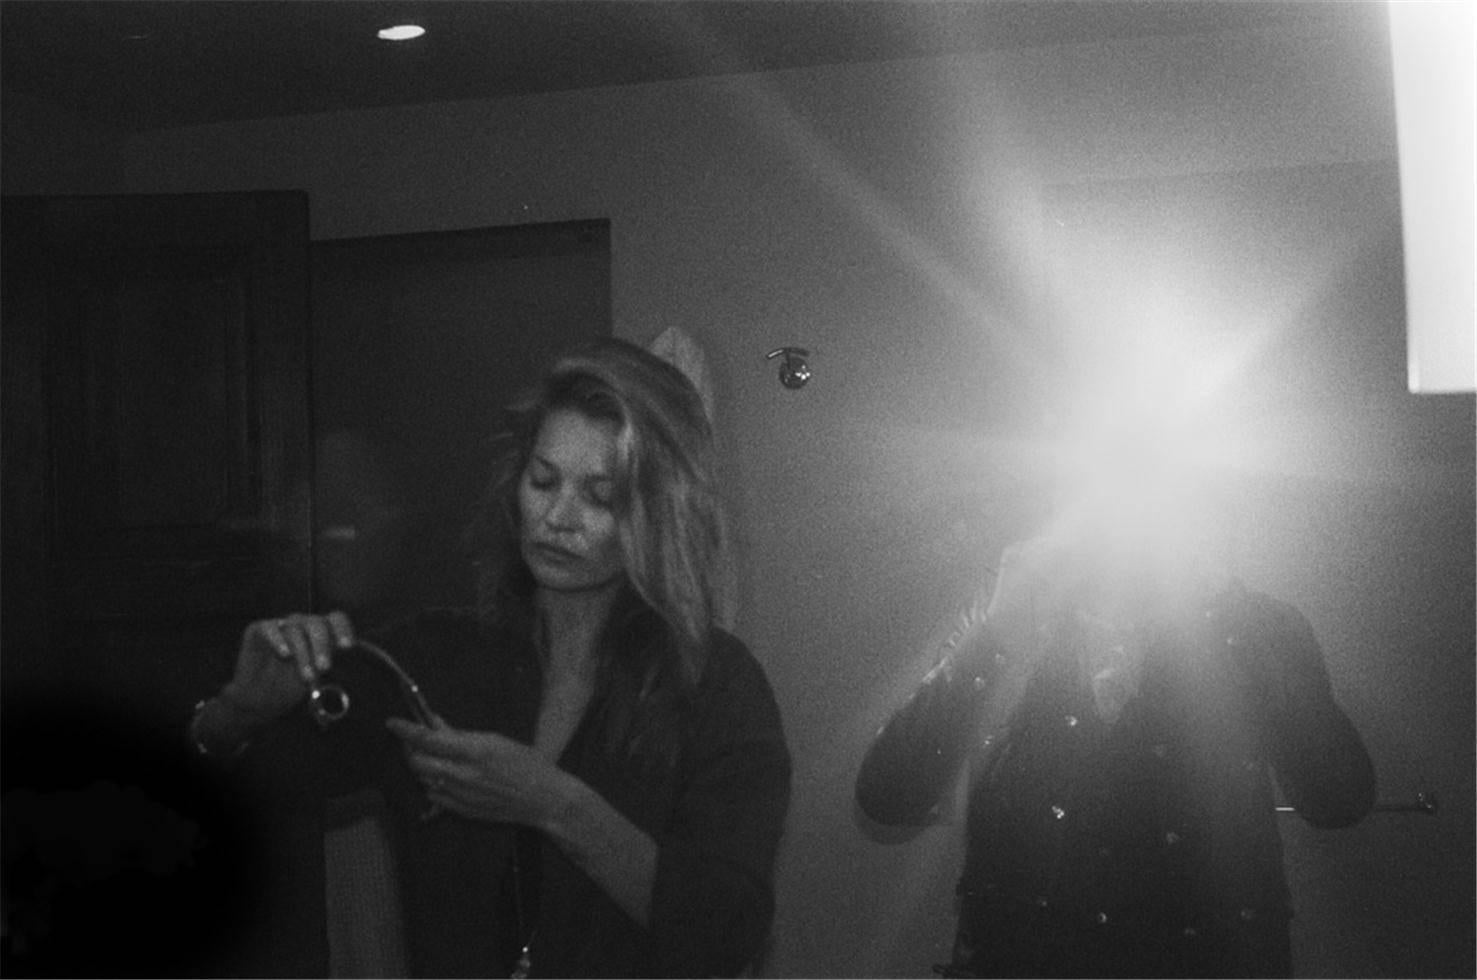 Jamie Hince Black and White Photograph - Kate Moss "Flash"